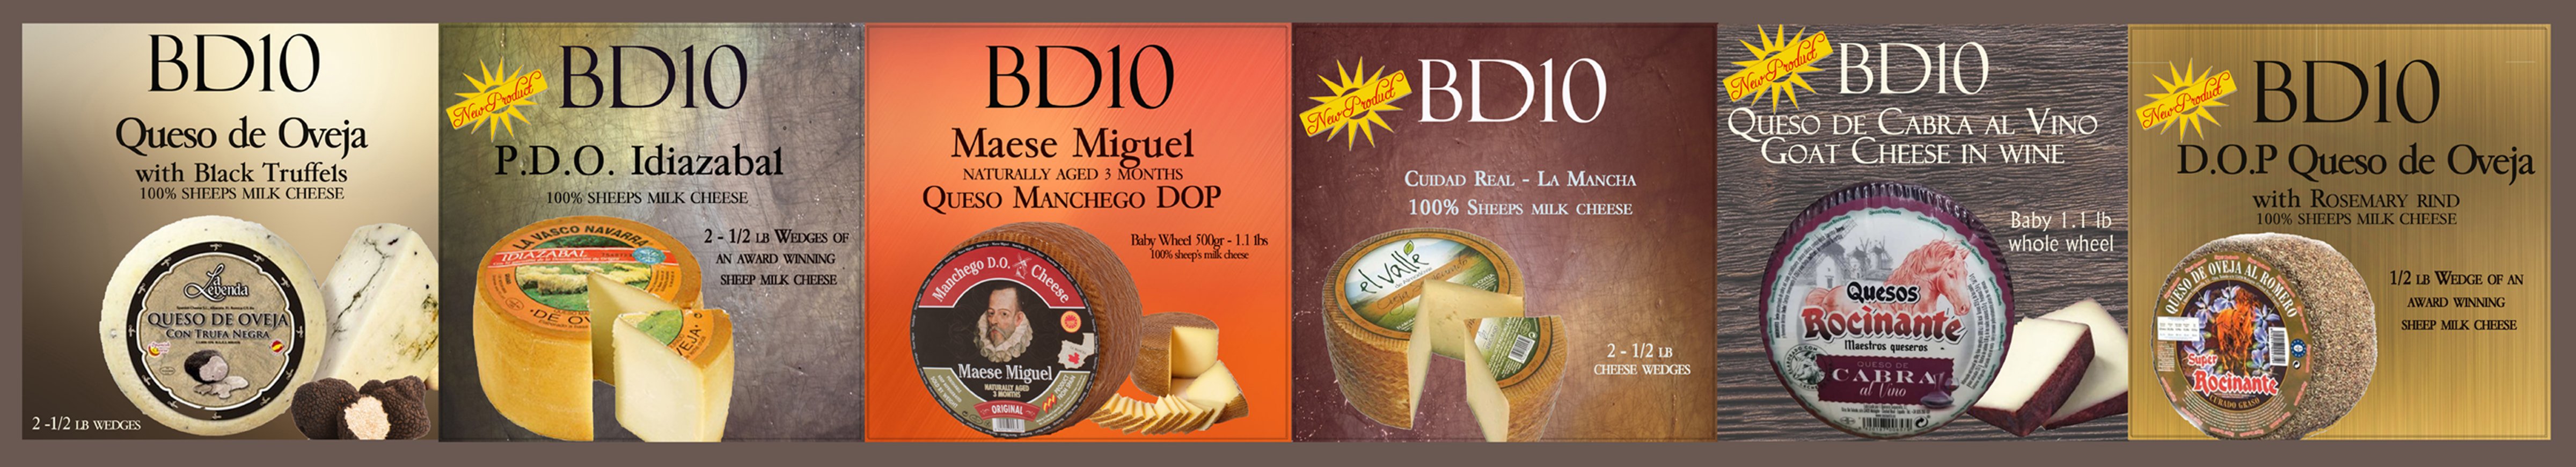 BD10 Cheese Banner.jpg